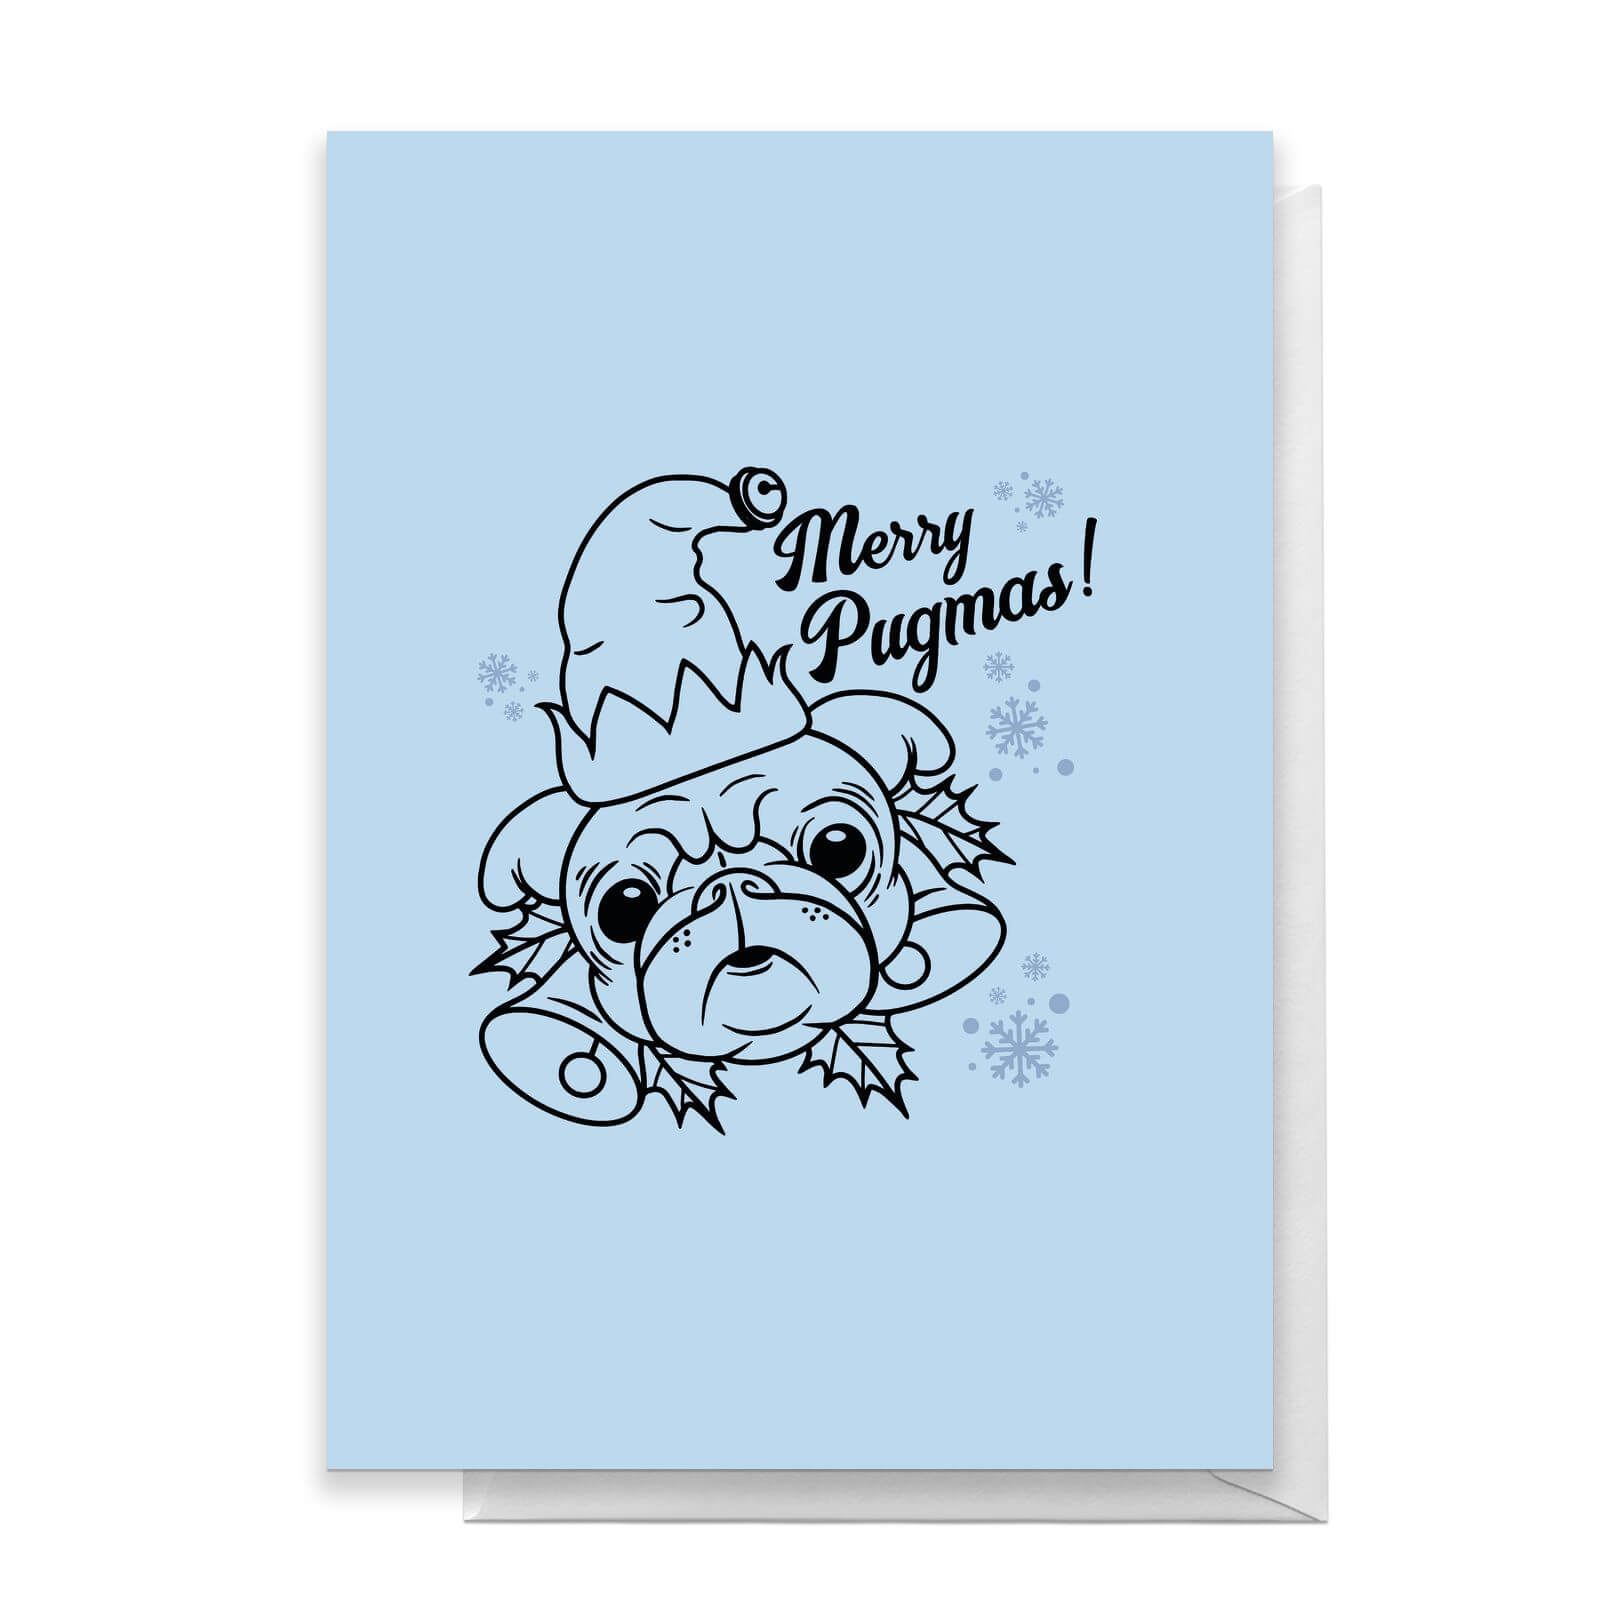 Merry Pugmas Greetings Card - Standard Card